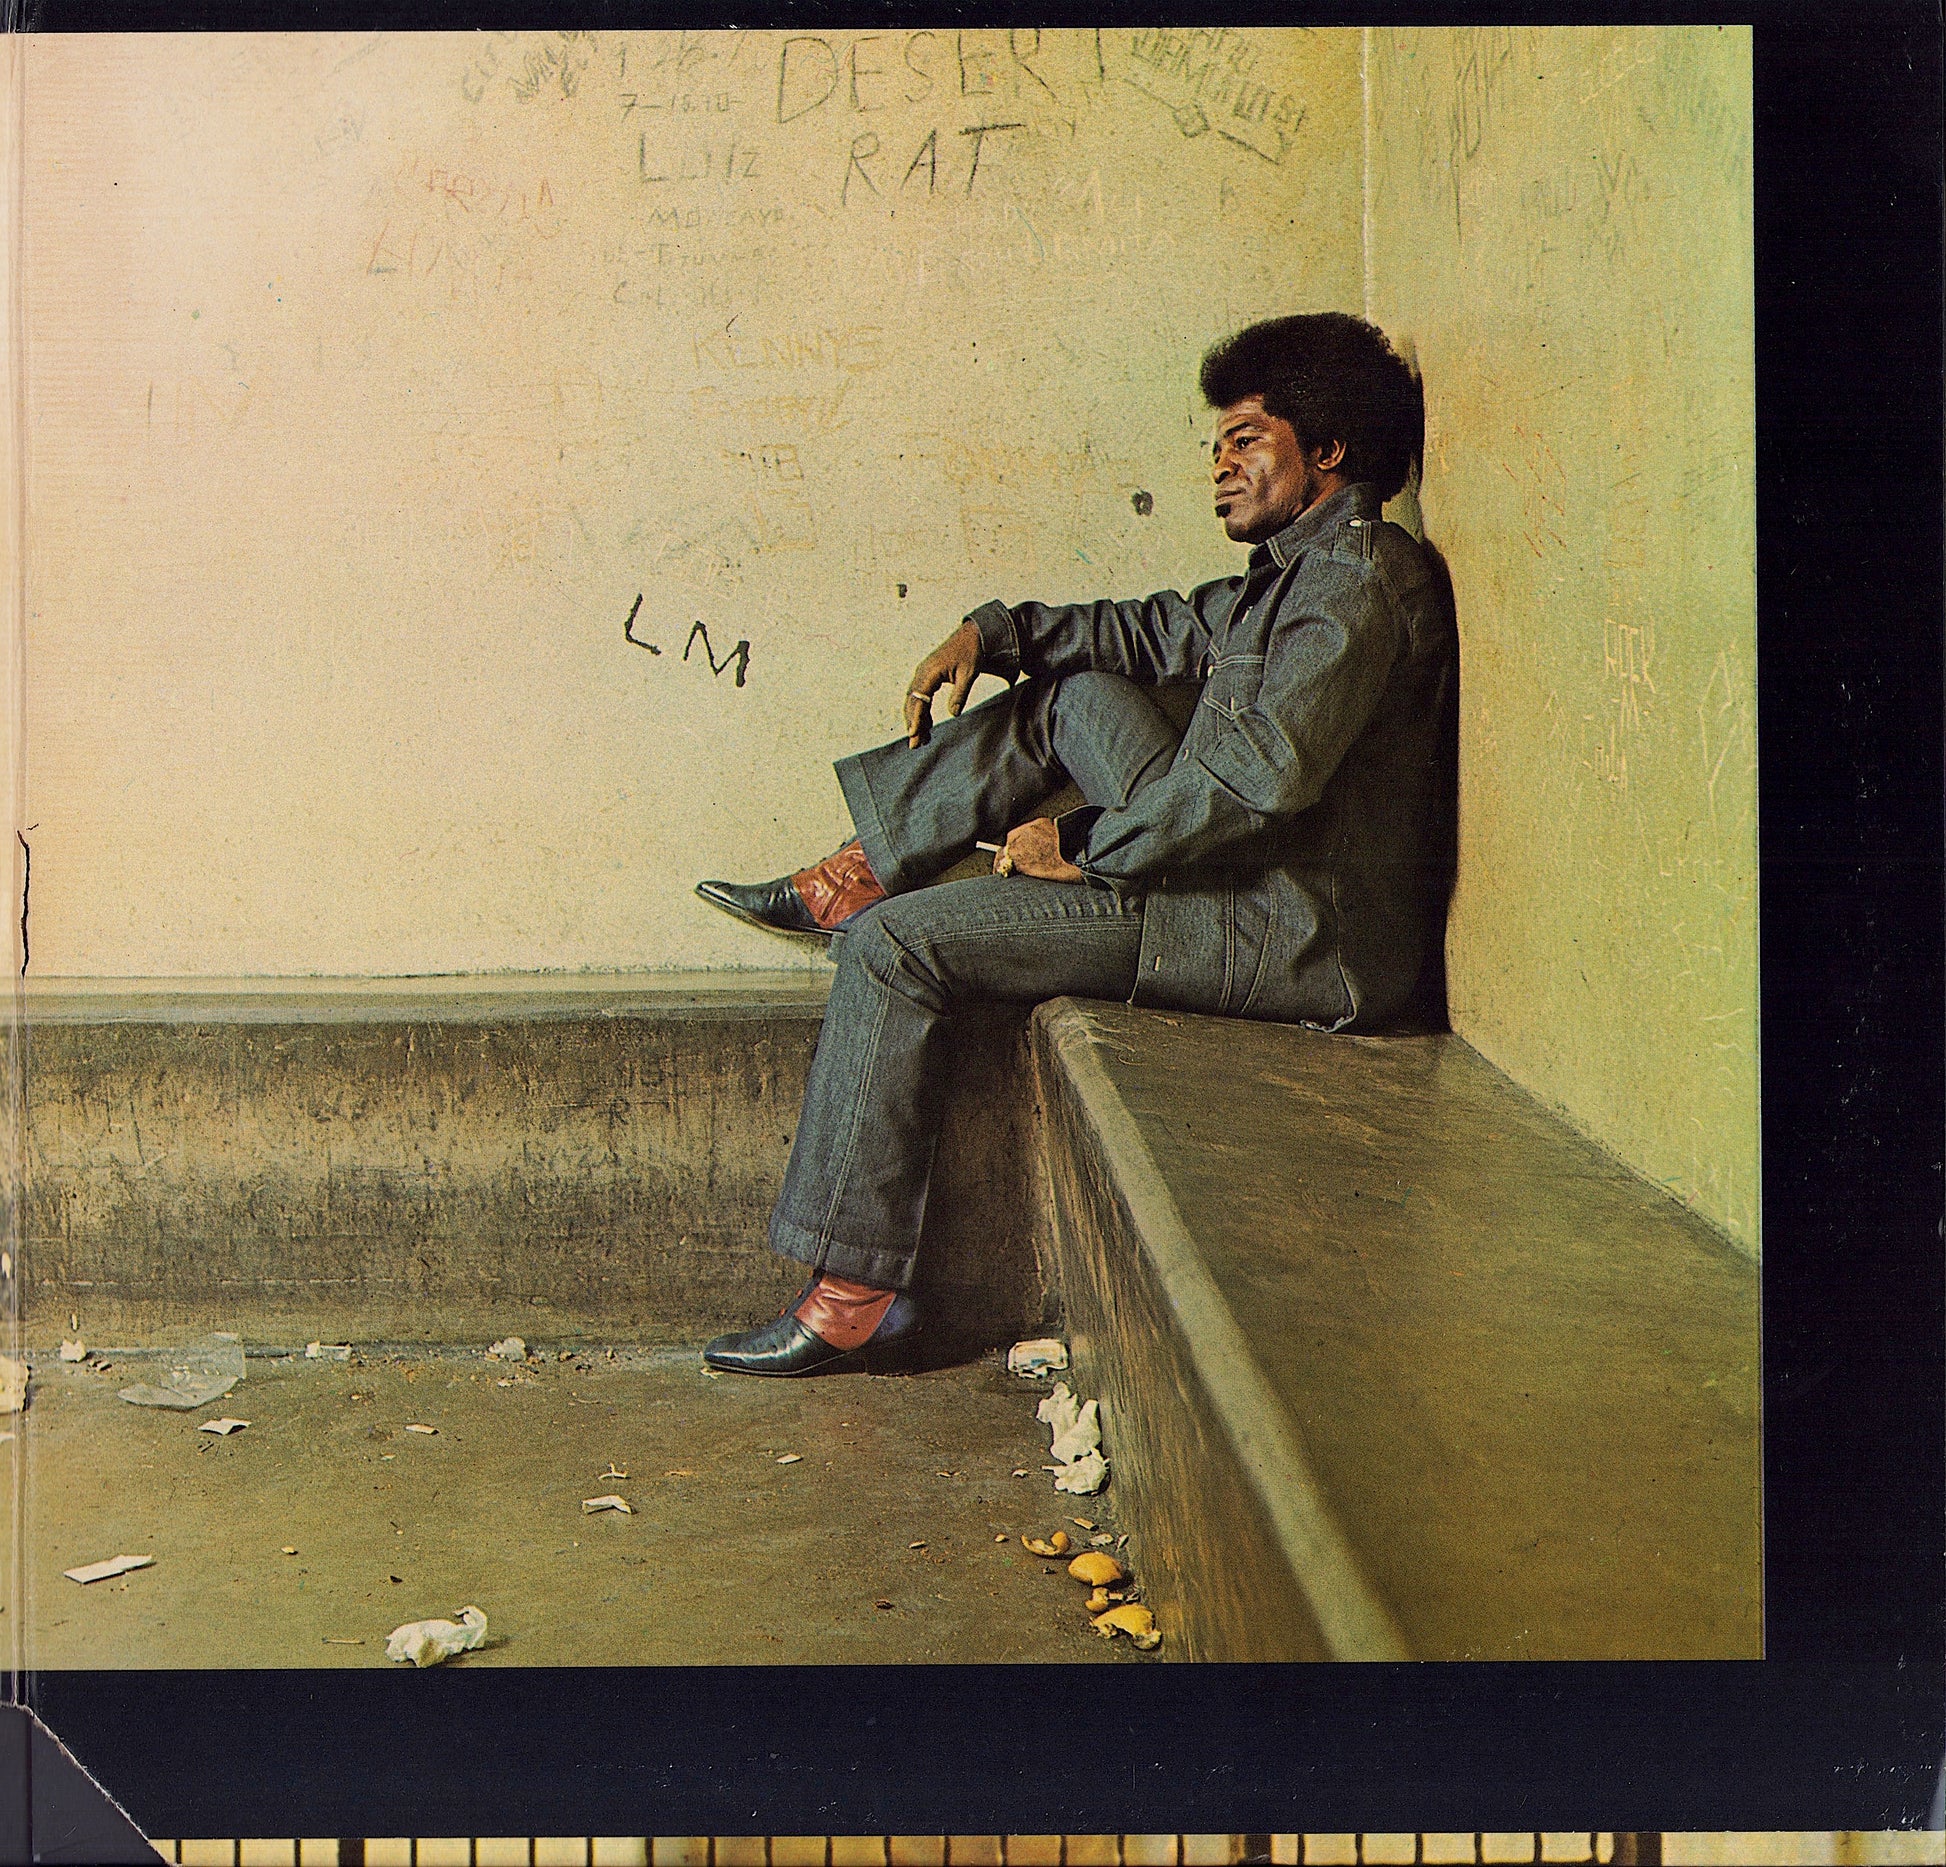 James Brown ‎- Revolution Of The Mind Vinyl 2LP US